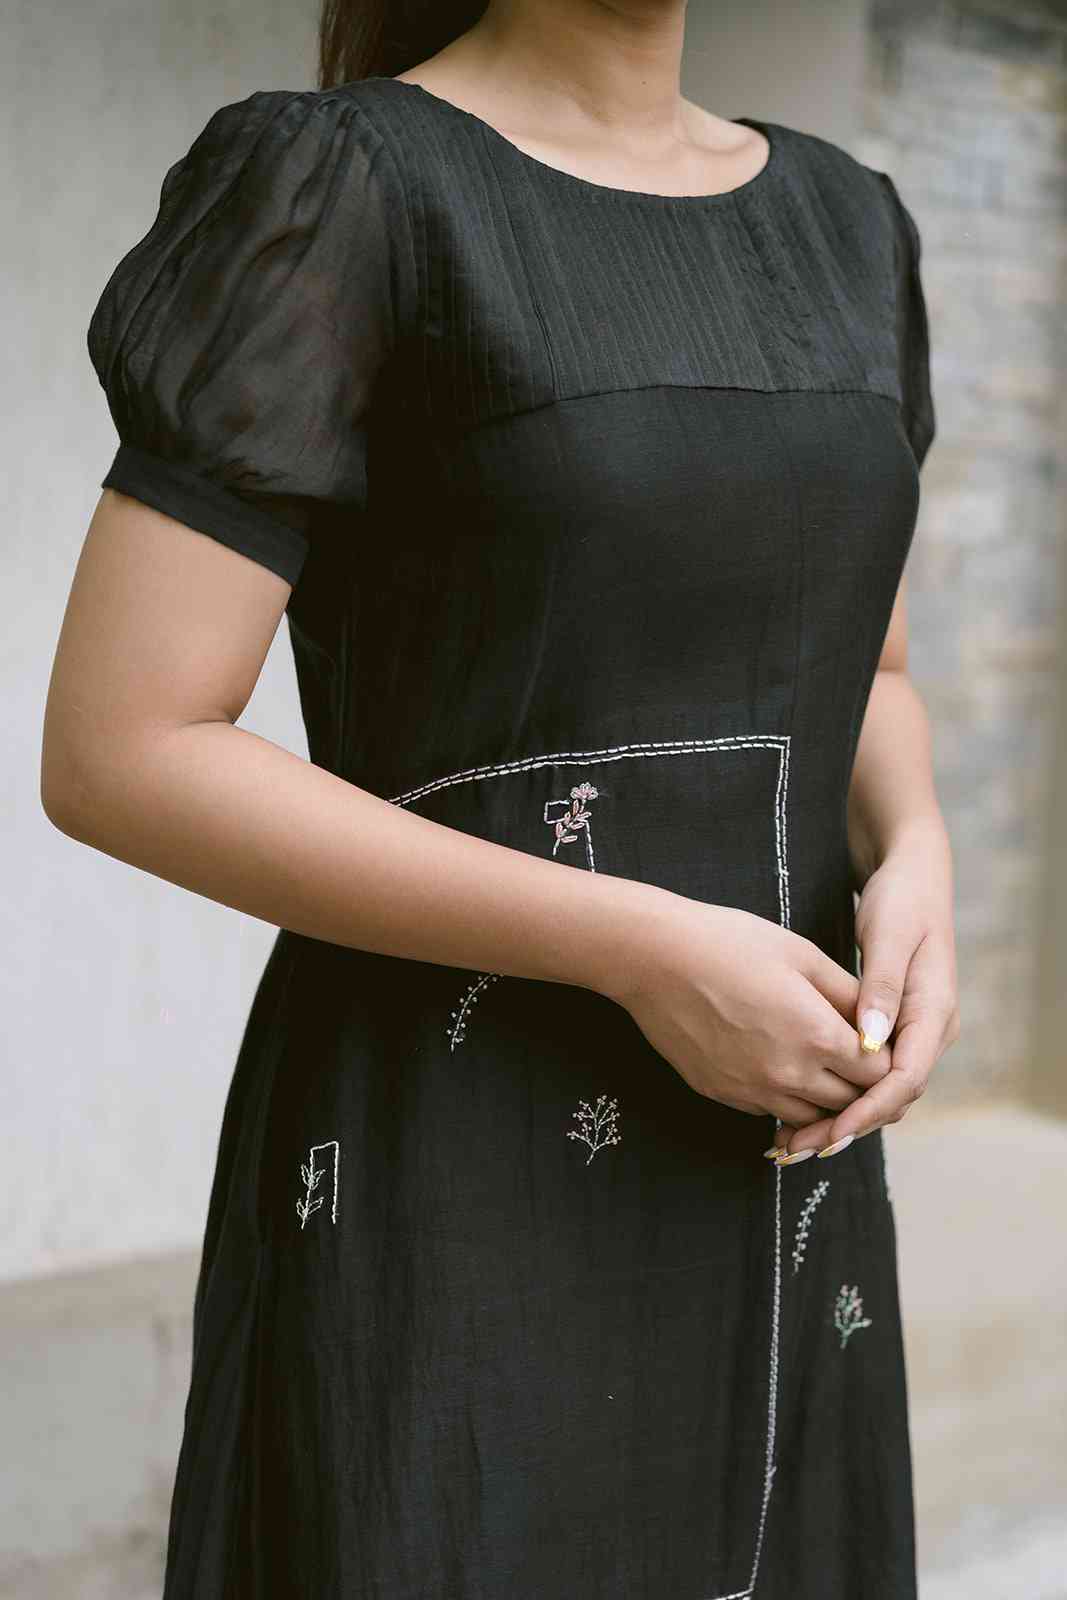 Black Handloom Blossoms 2.0 Chanderi Calf Length Dress